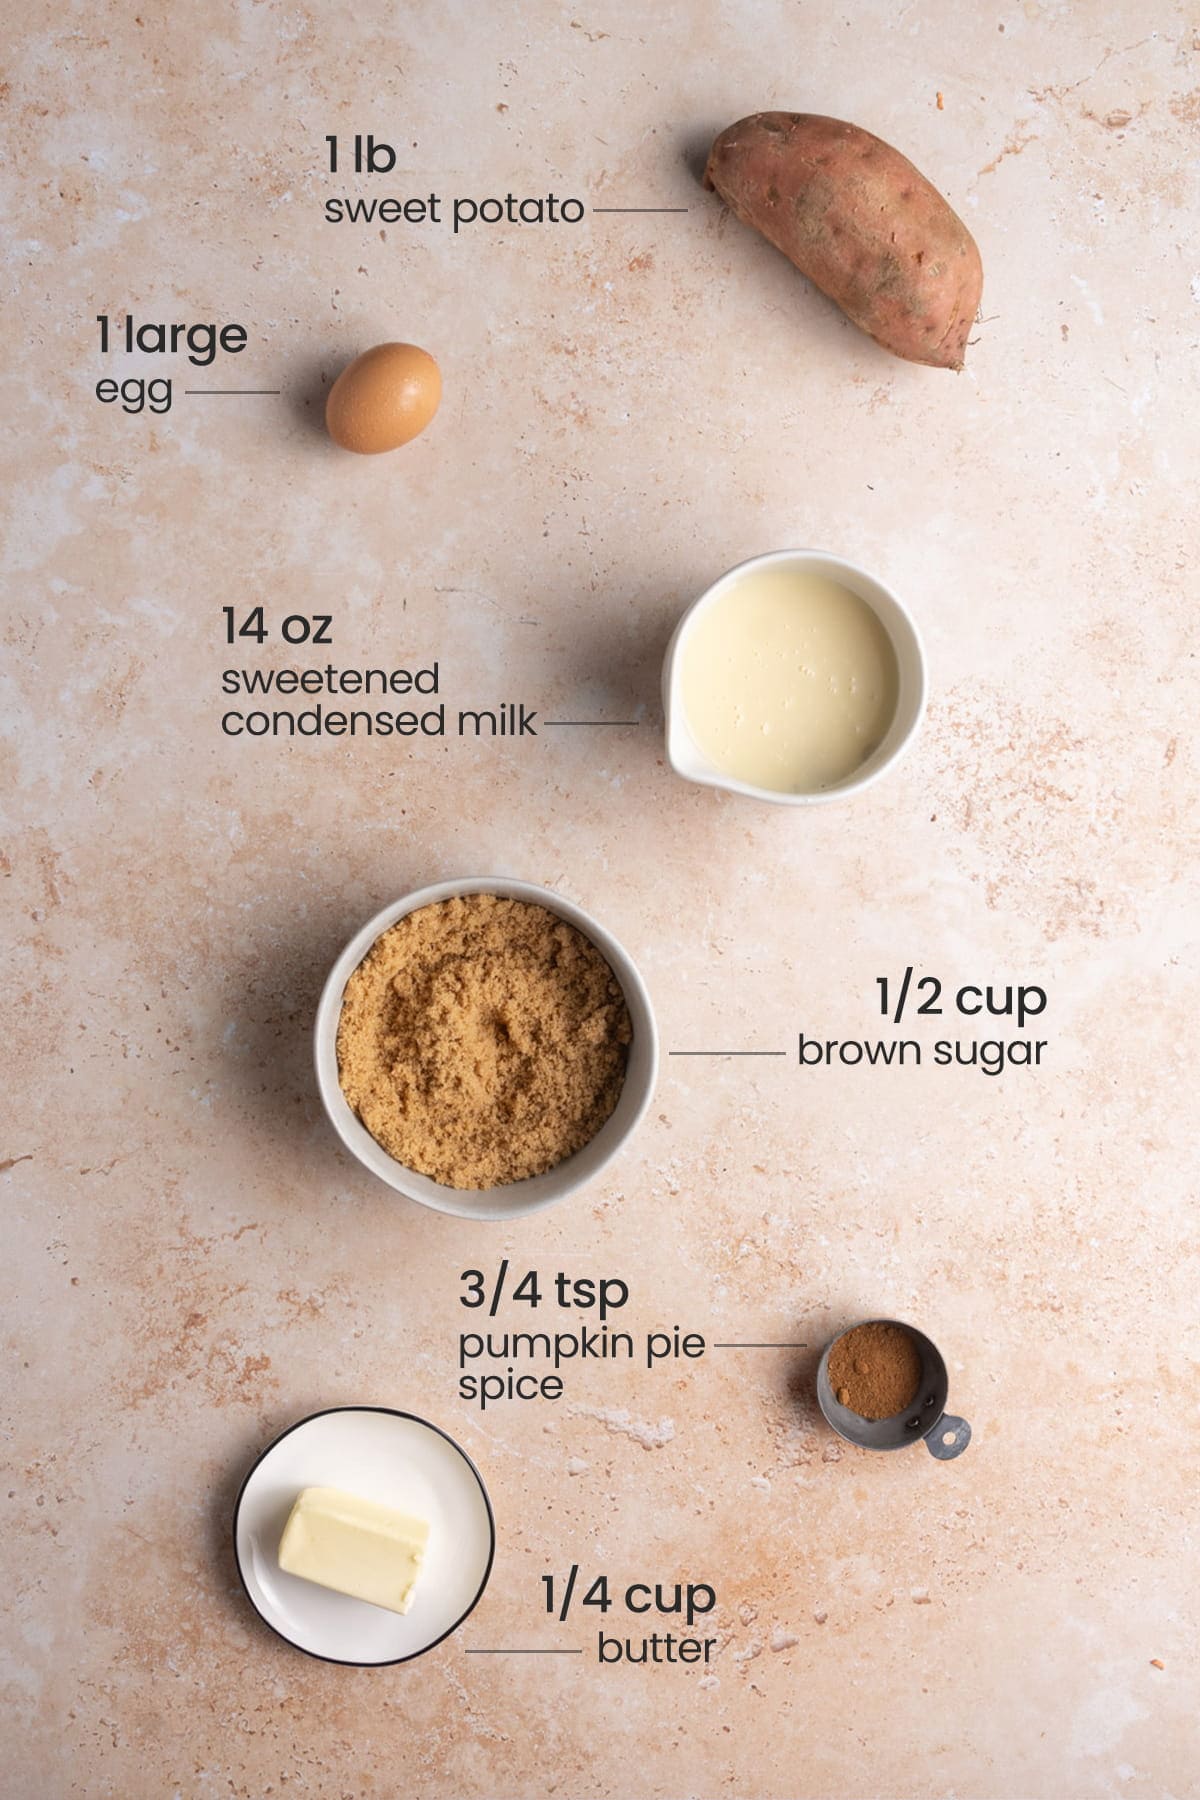 ingredients for sweet potato pie filling - sweet potato, egg, sweetened condensed milk, brown sugar, pumpkin pie spice, butter